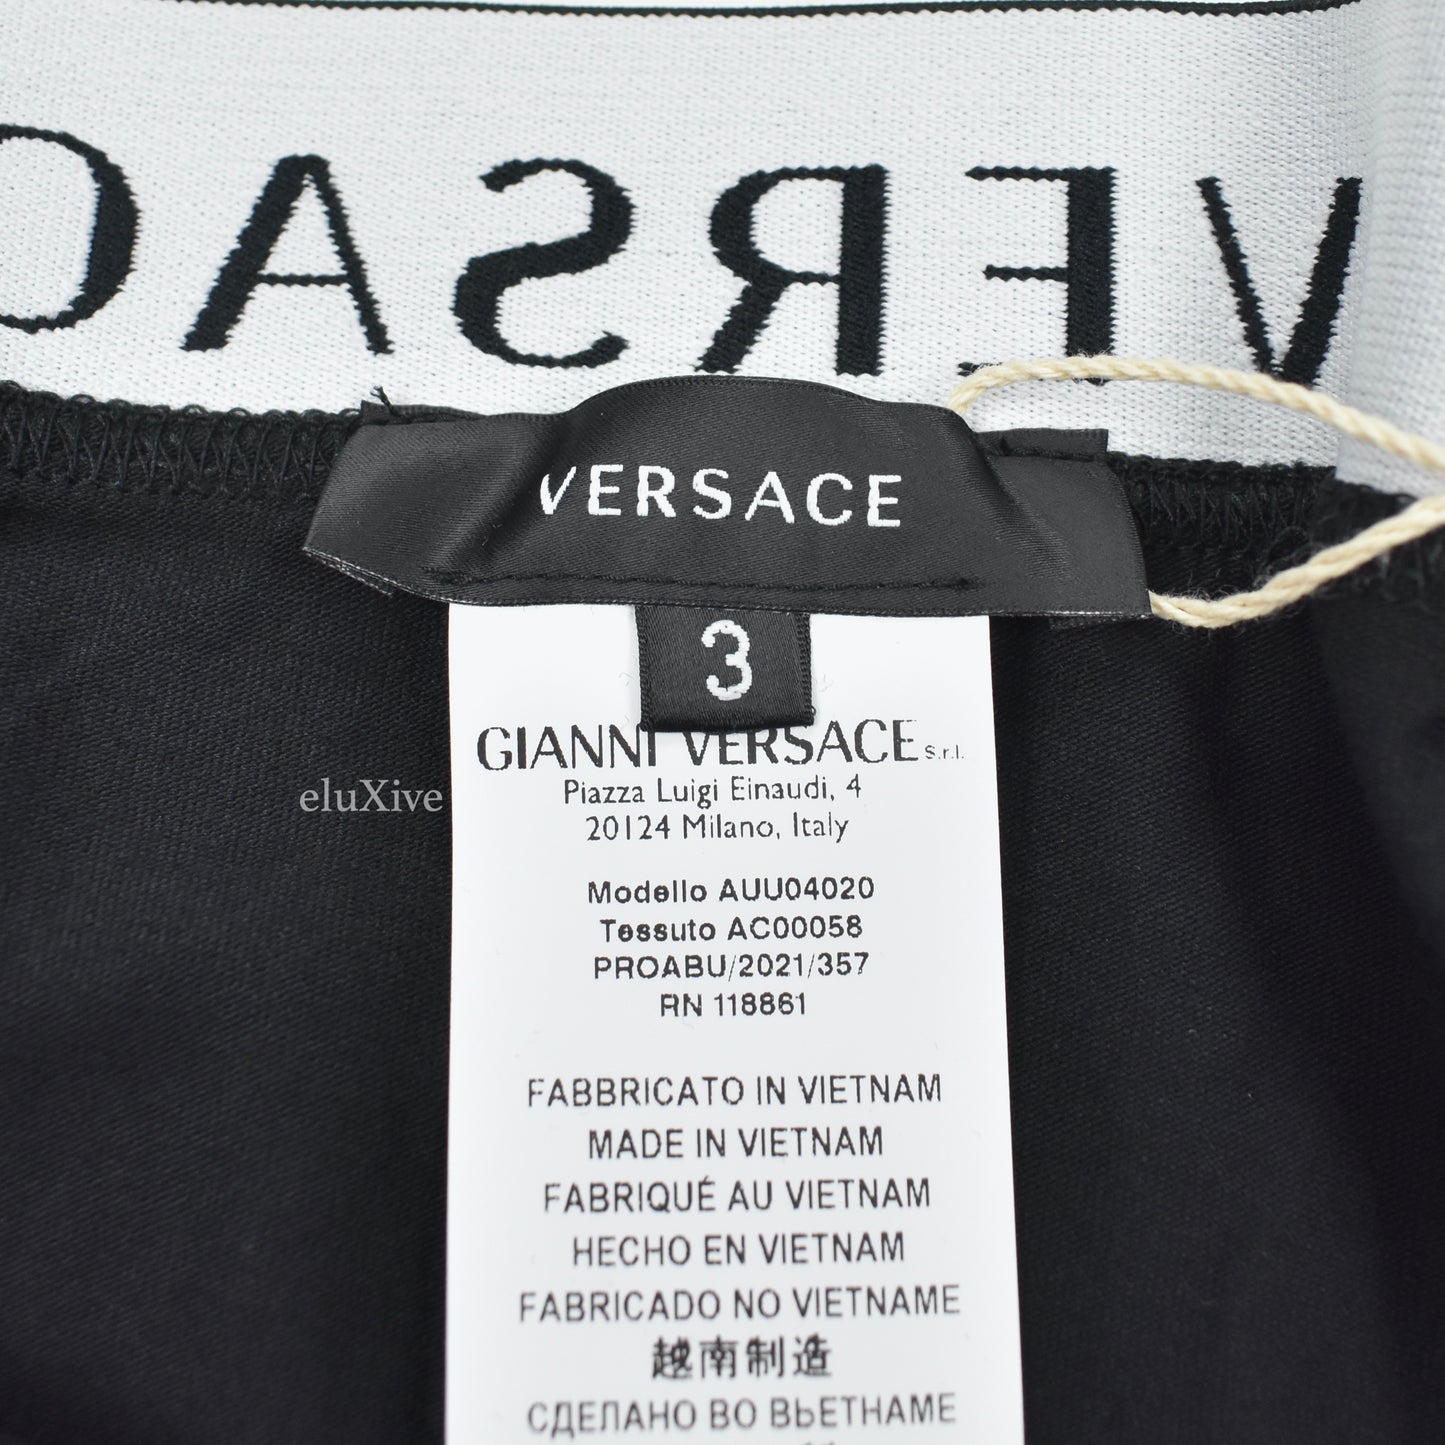 Versace - Black Logo Boxer Briefs (3-Pack)